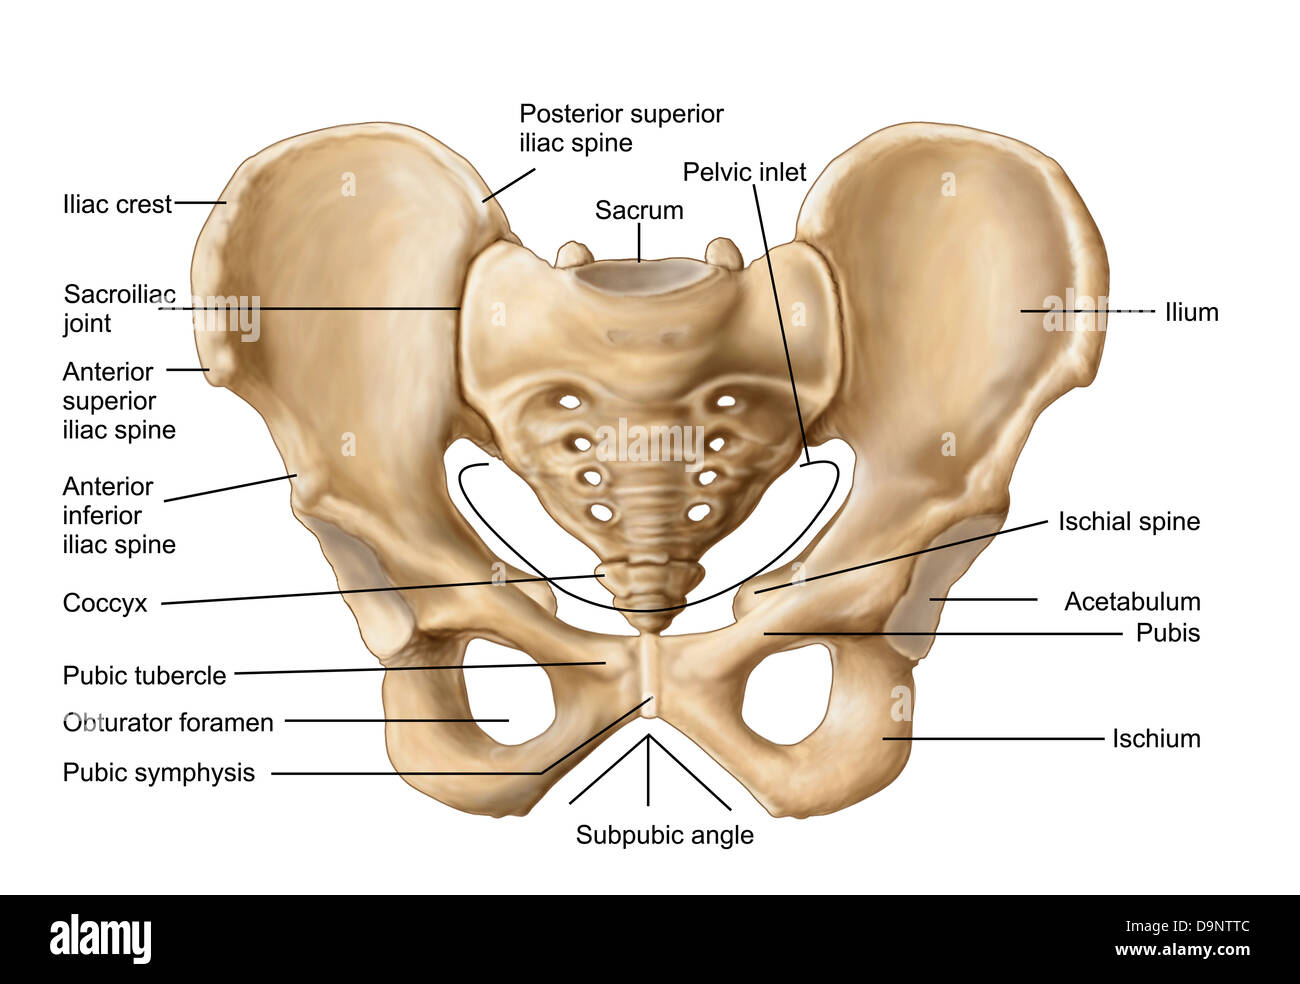 https://c8.alamy.com/comp/D9NTTC/anatomy-of-human-pelvic-bone-D9NTTC.jpg